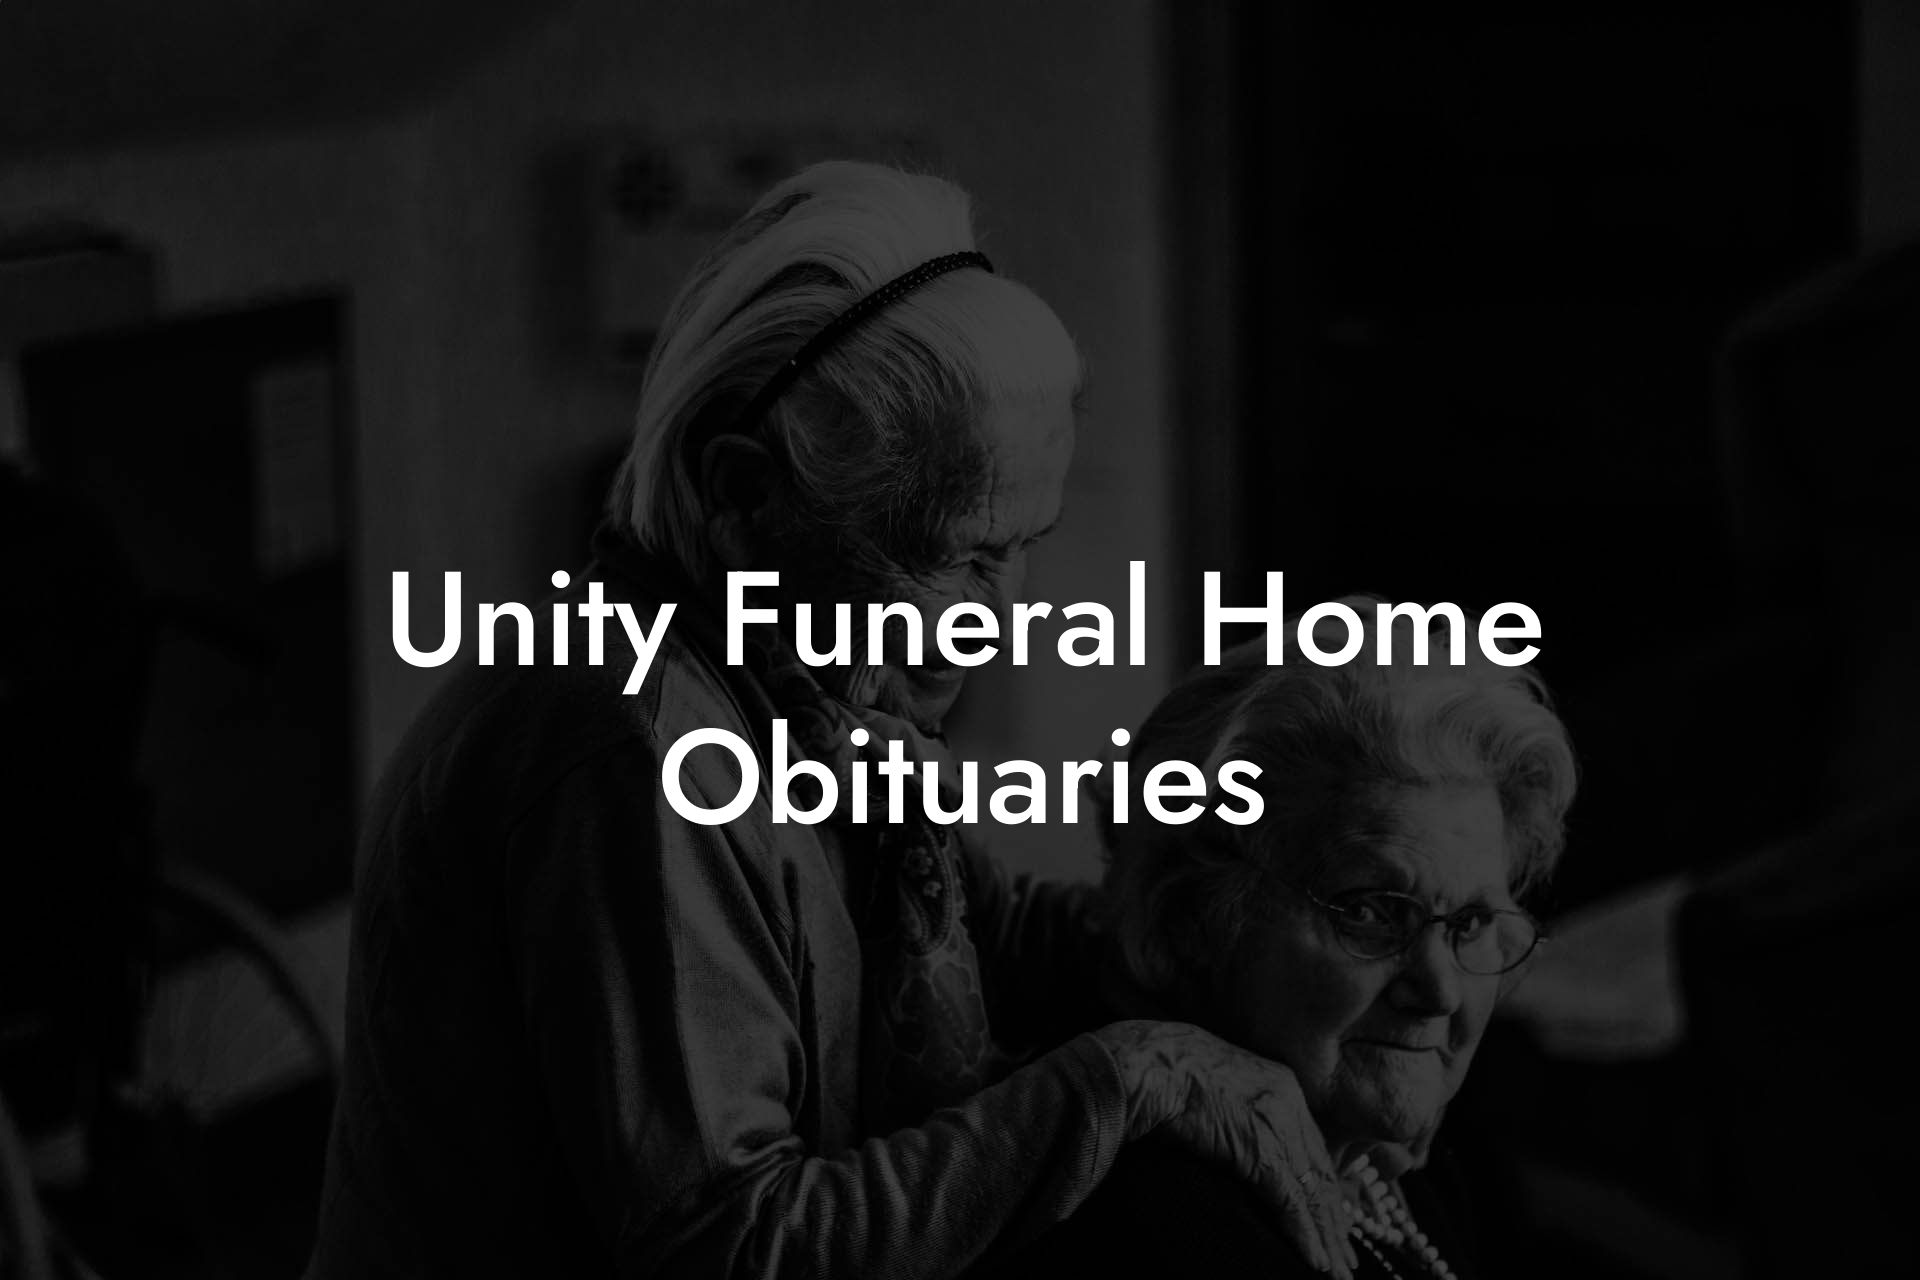 Unity Funeral Home Obituaries